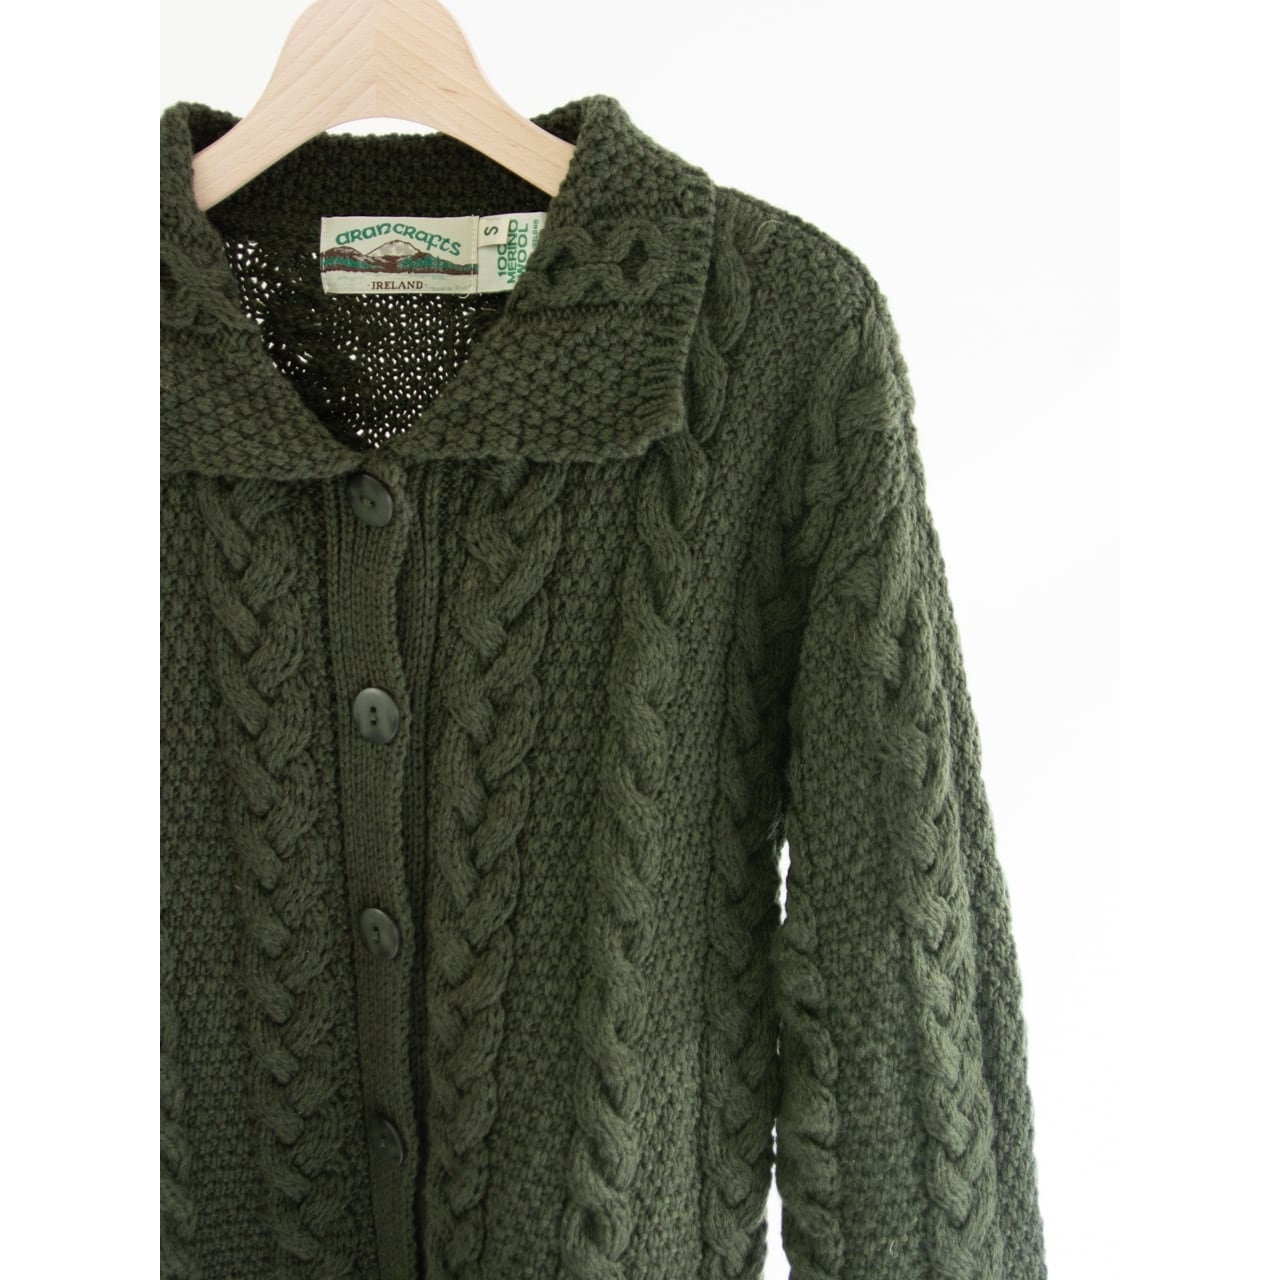 aran crafts】Made in Ireland 100% Merino Wool Fisherman Knit ...